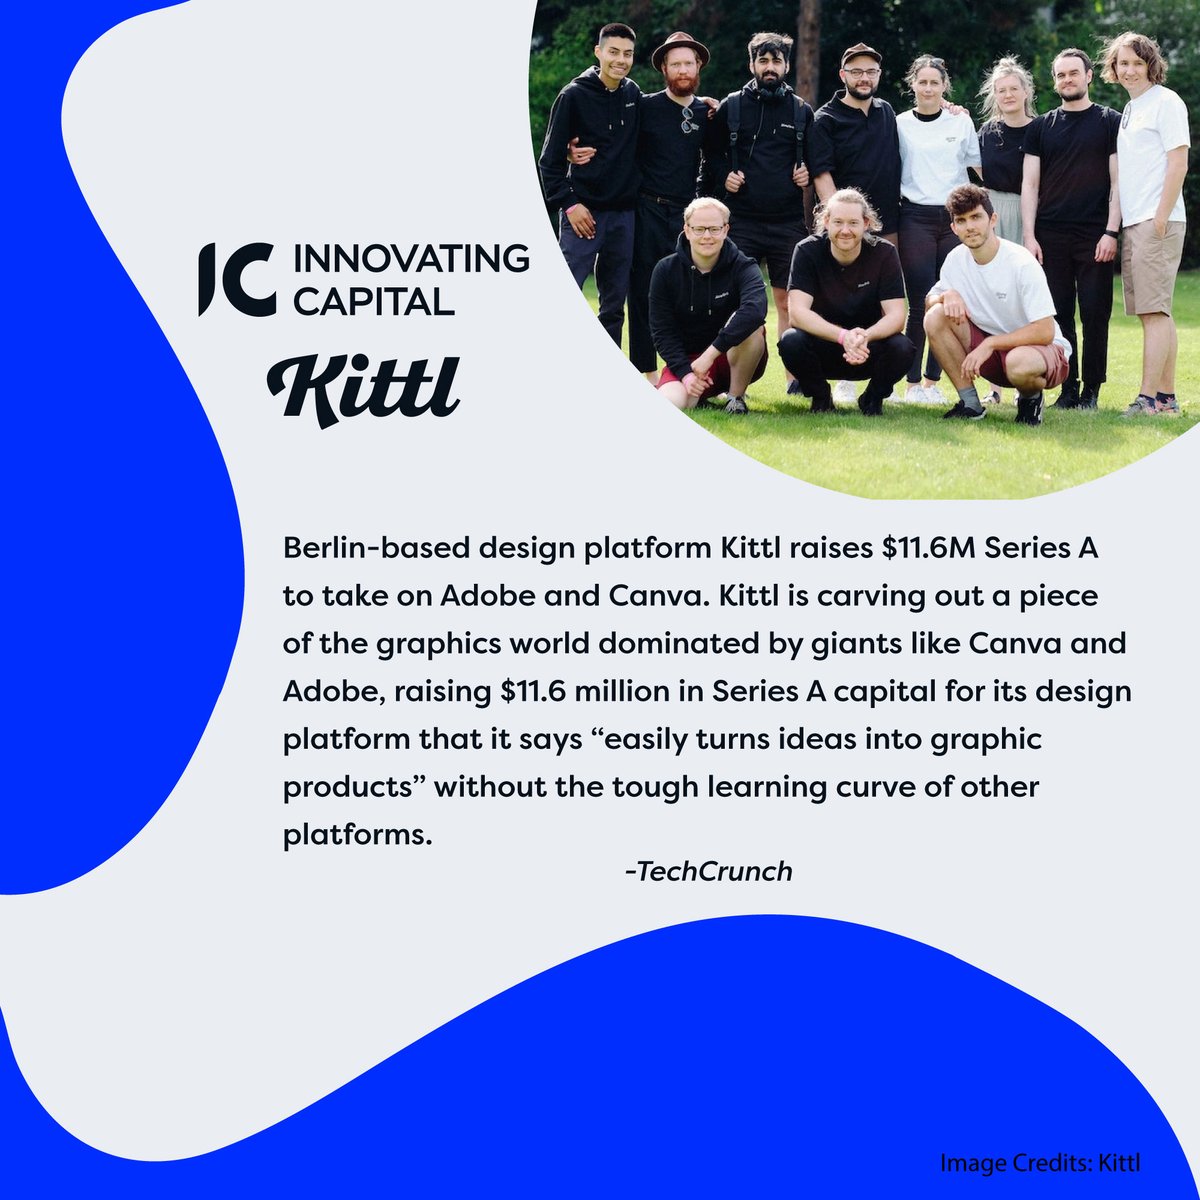 Berlin-based design platform Kittl raises $11.6M Series A to take on Adobe and Canva. 
•
#kittl #berlindesign #seriesa #adobe #canva #graphicdesign #designplatform #easeofuse #investment #startupnews #techcrunch #designplatform #seriesacapital